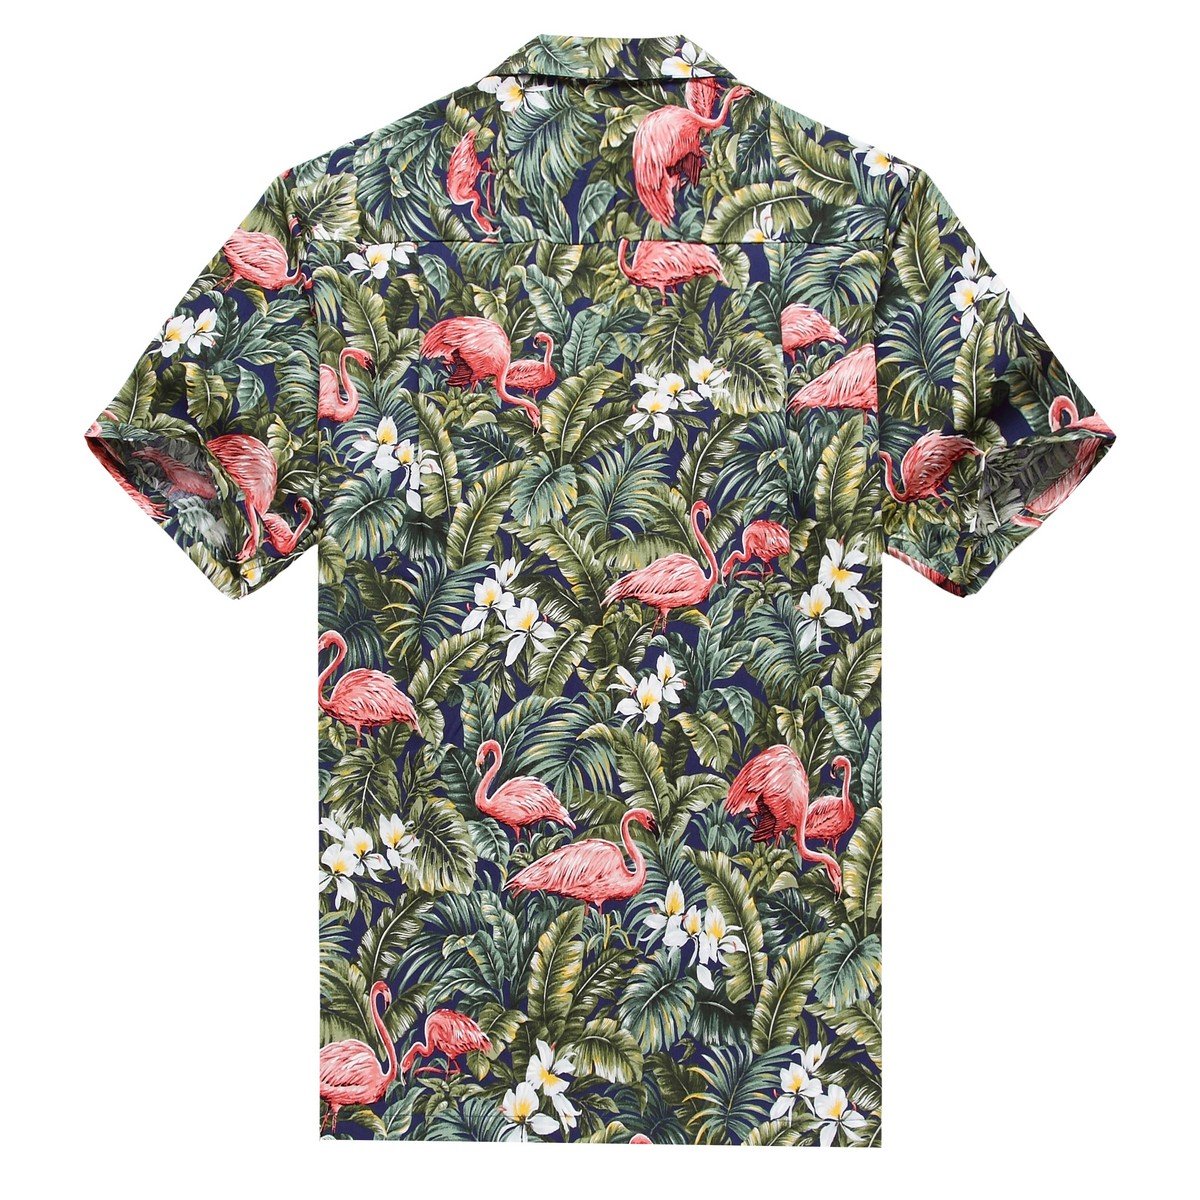 Men's Aloha Shirt Flamingo in Rain Forest Jungle Navy - Pinotee Store